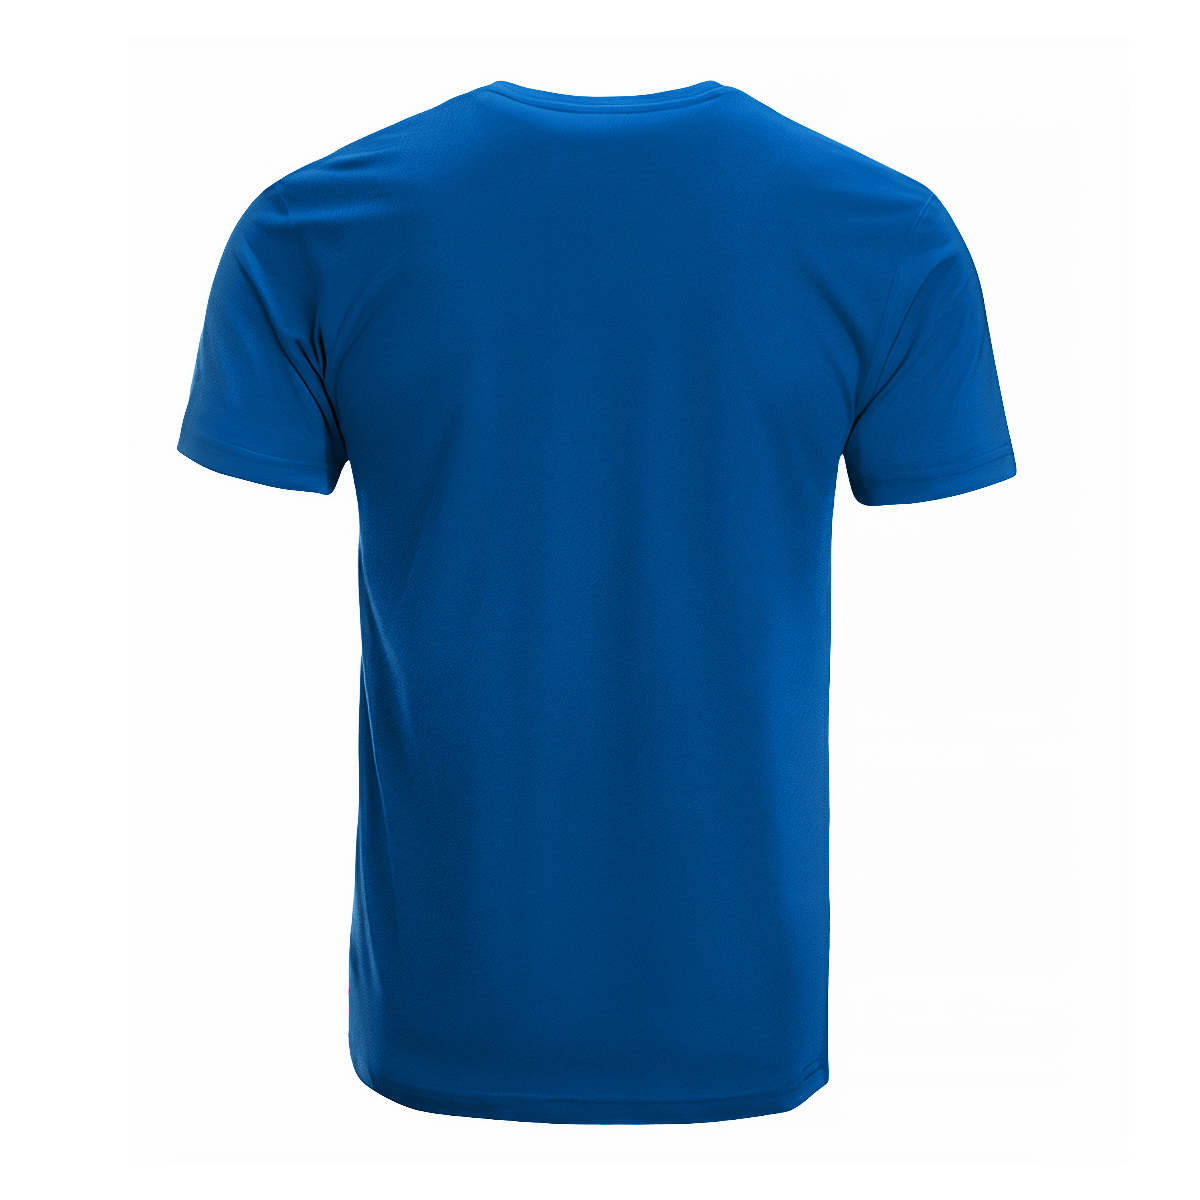 Mercer Tartan Crest T-shirt - I'm not yelling style